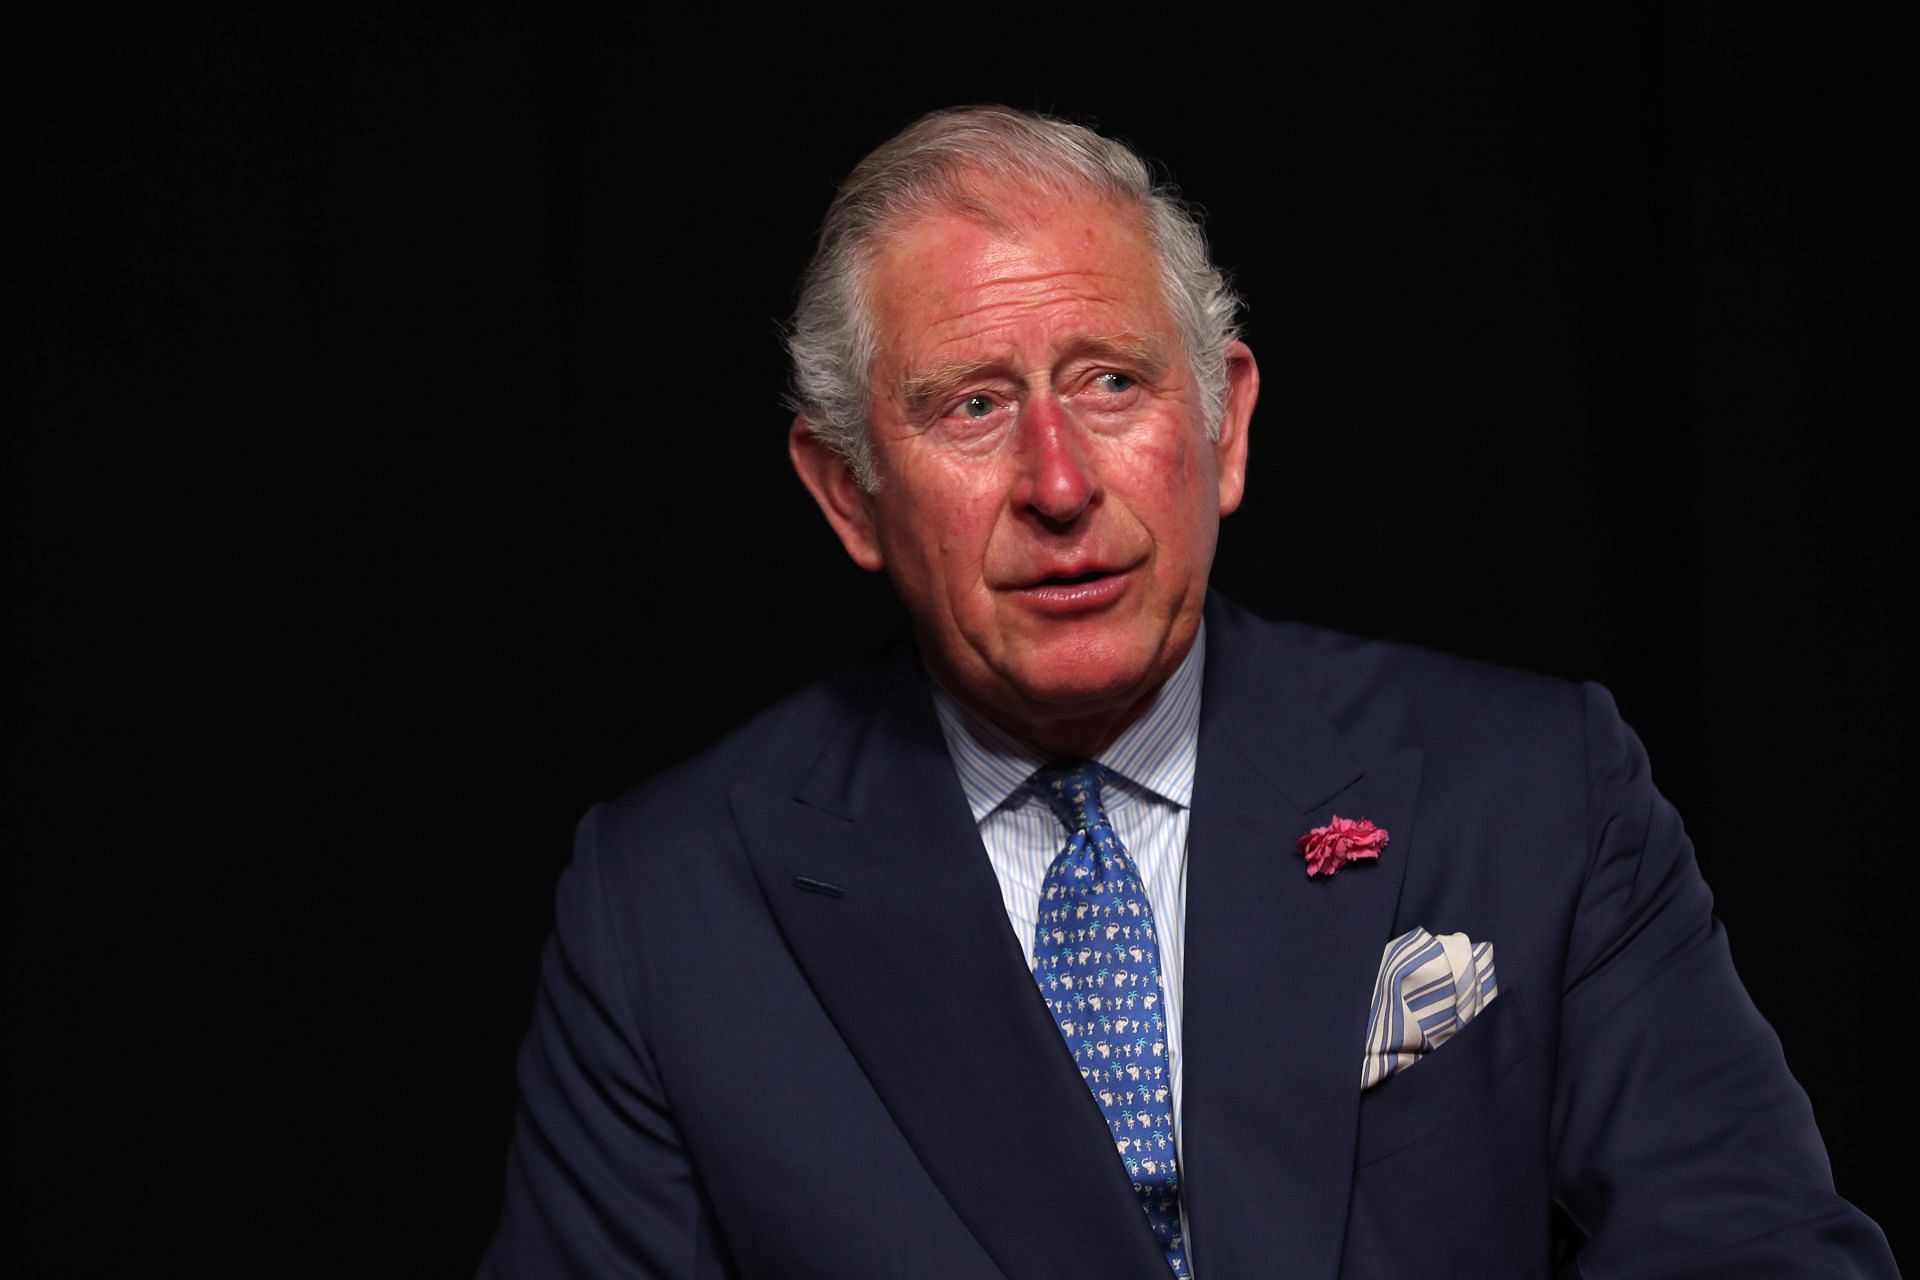 King Charles at Cornwall visit YouTube space London (Image via Getty)